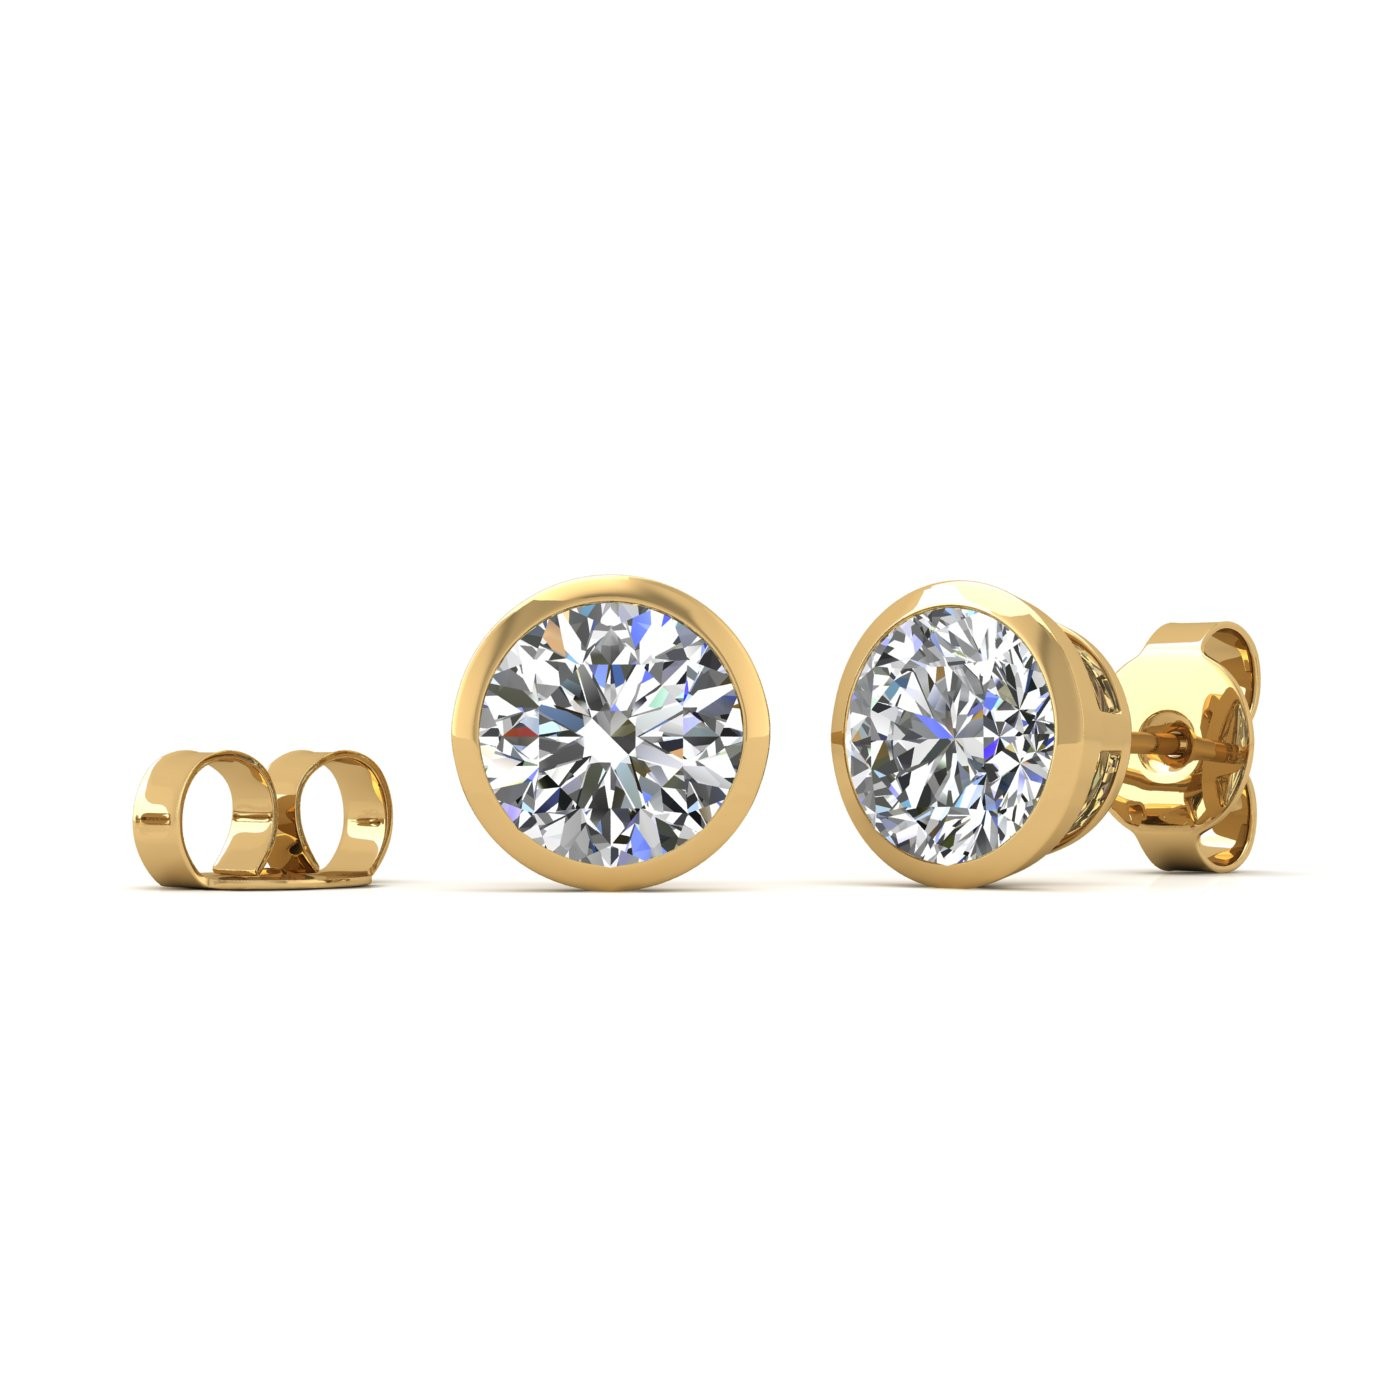 18k yellow gold 0,7 ct each (1,4 tcw) round brilliant cut diamond bezel set earring studs